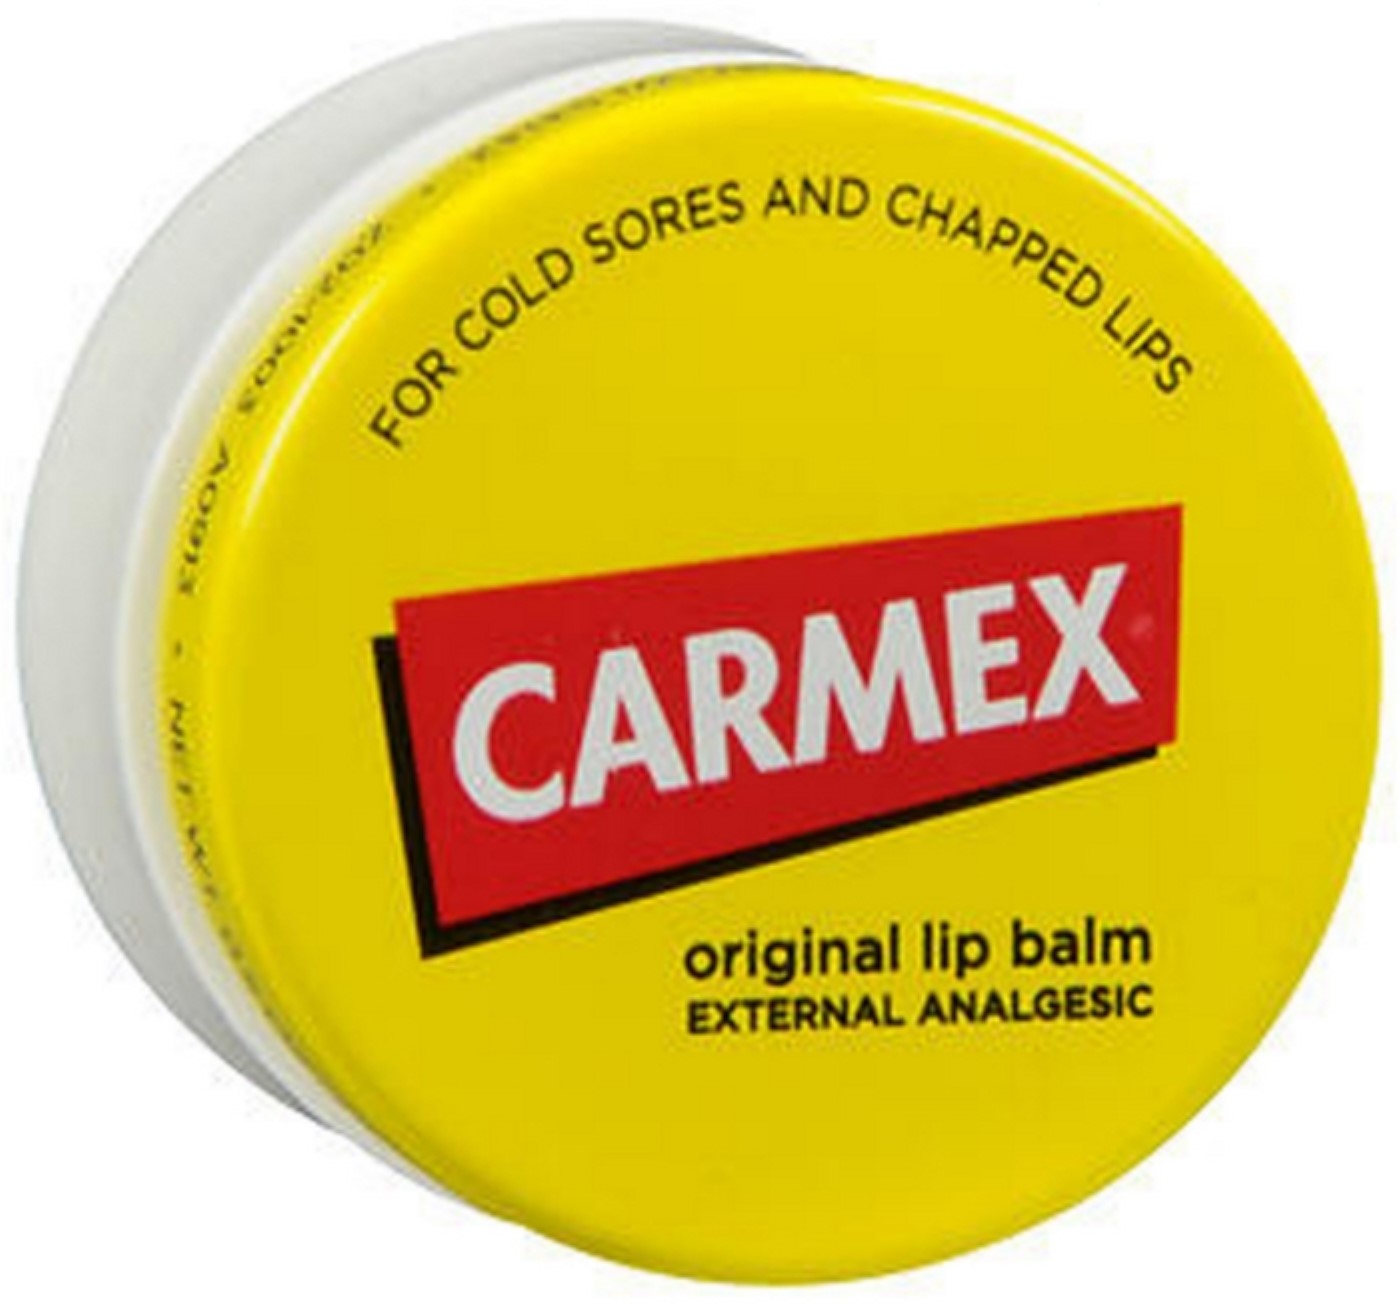 Carmex Original Lip Balm 0.50 oz - image 1 of 2